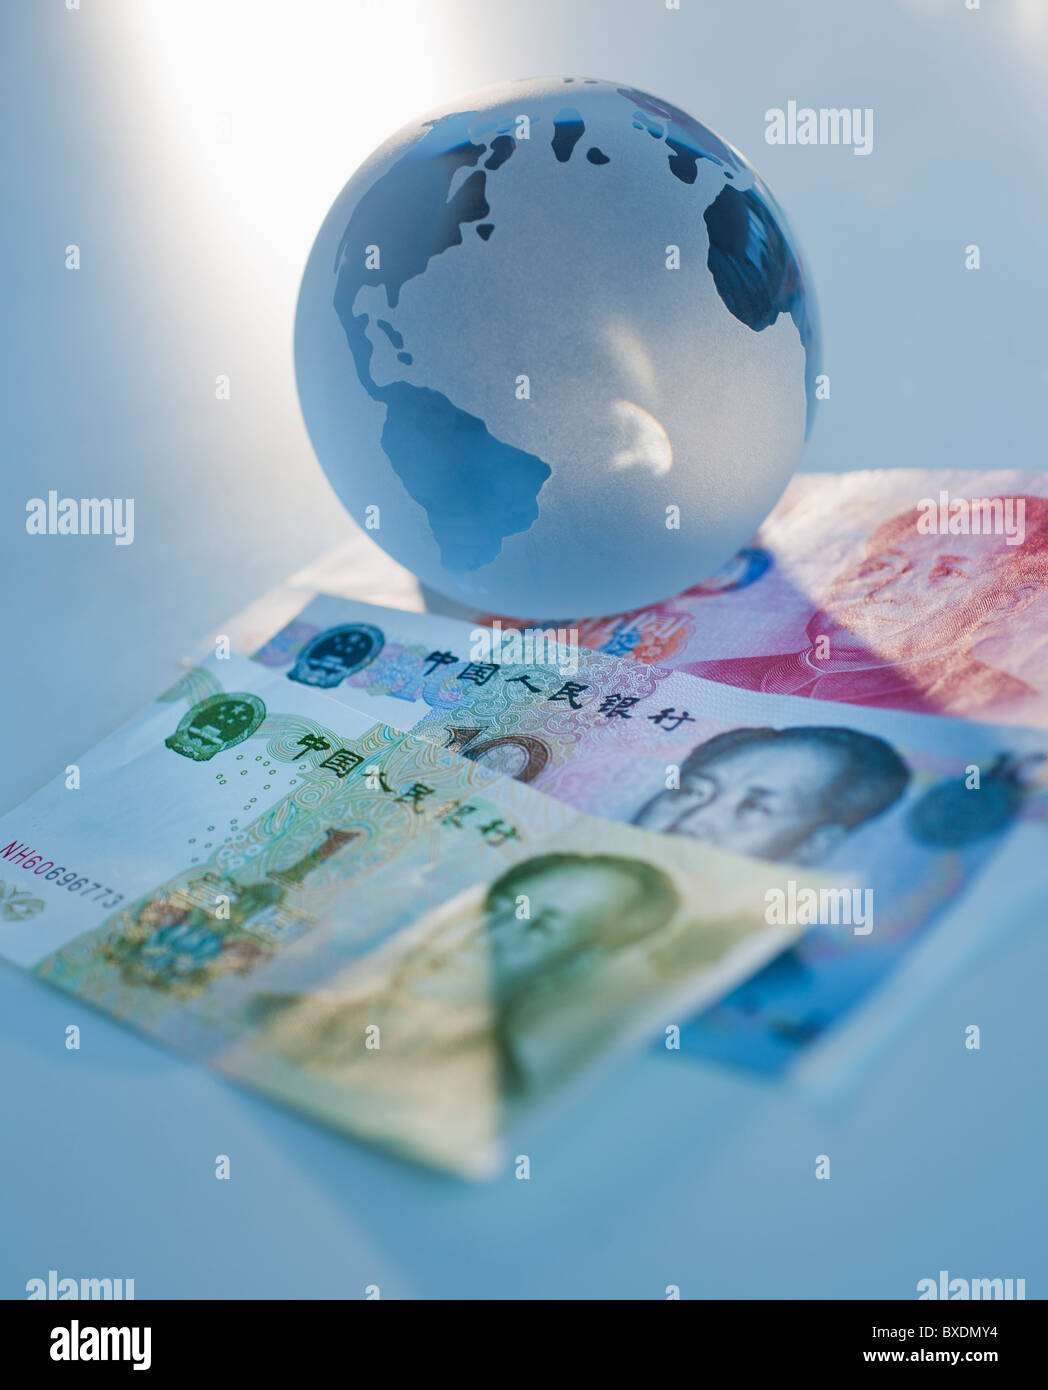 globe as money box - mappamondo a salvadanaio Stock Photo